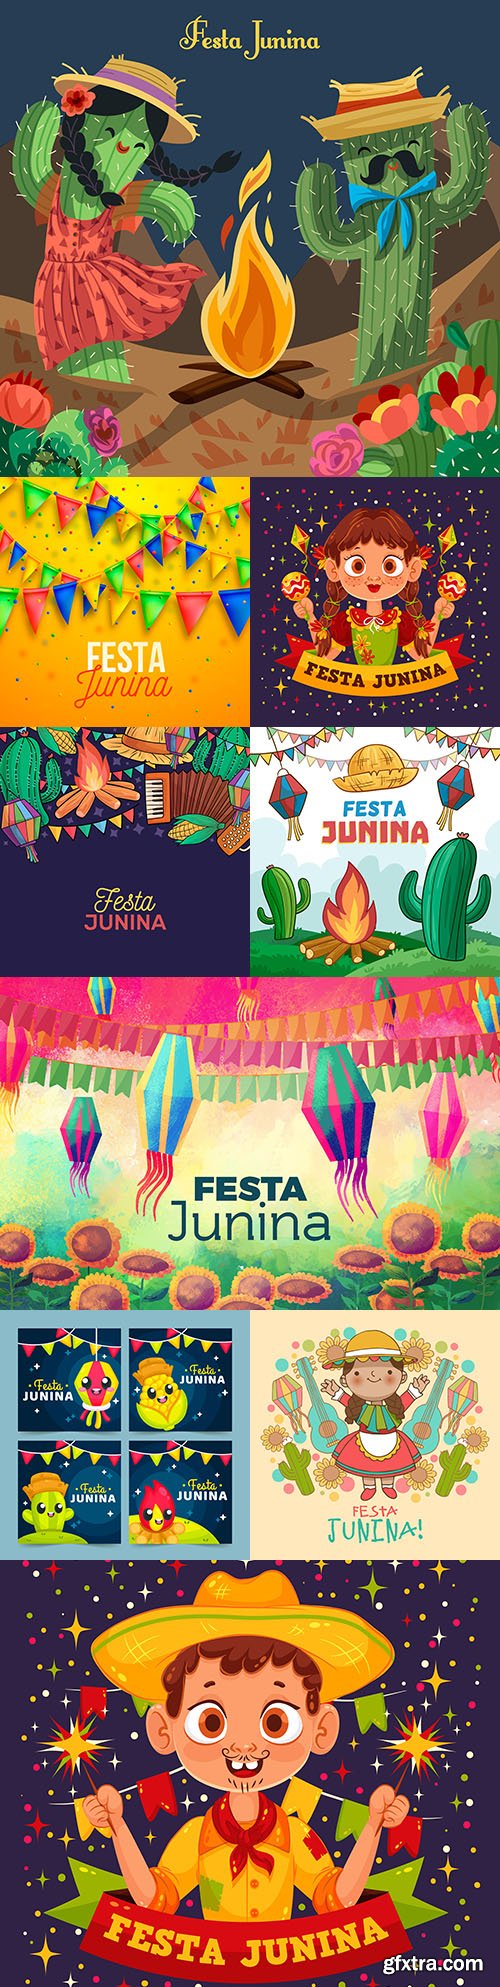 Festa Junina celebration drawn illustrations backgrounds